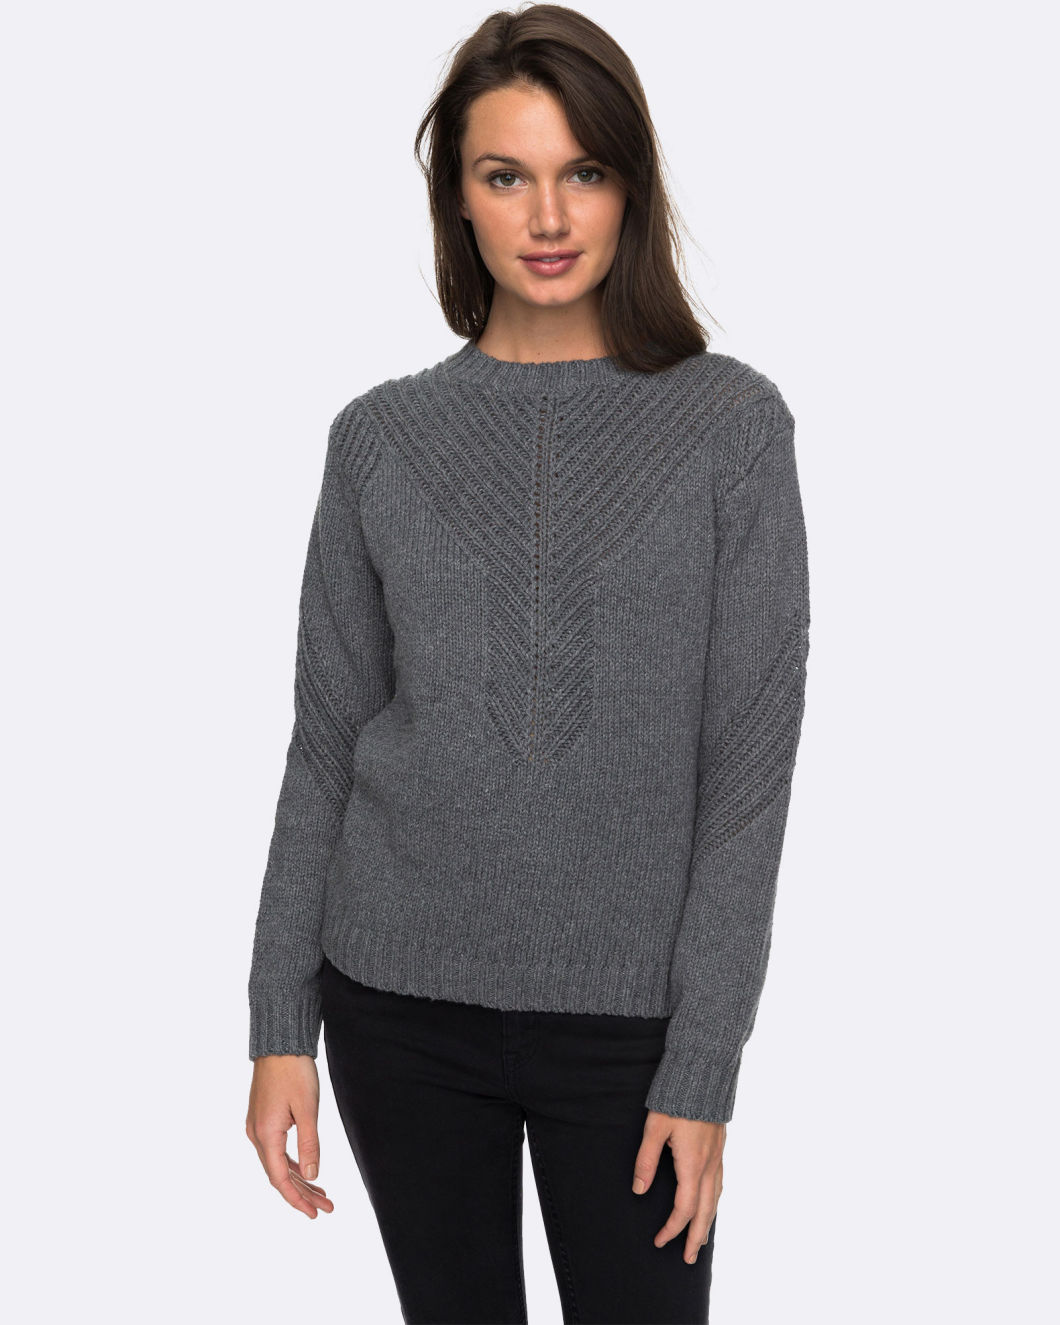 Xh Garment Keep Warm Sweater Knitting